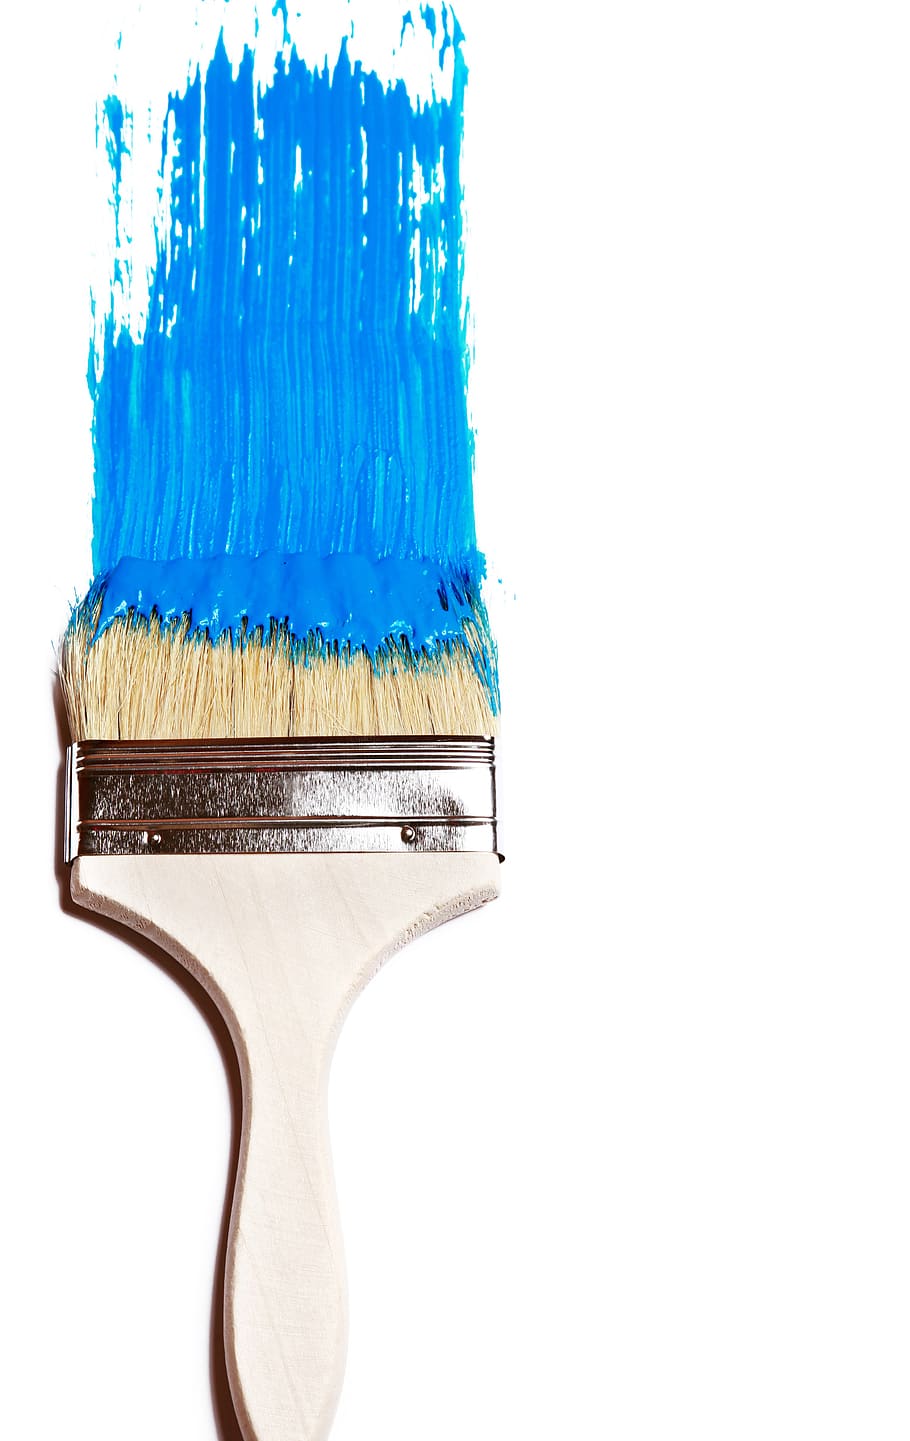 biru, cat, putih, dinding, lukisan, kreatif, kreativitas, dilukis, artistik, warna